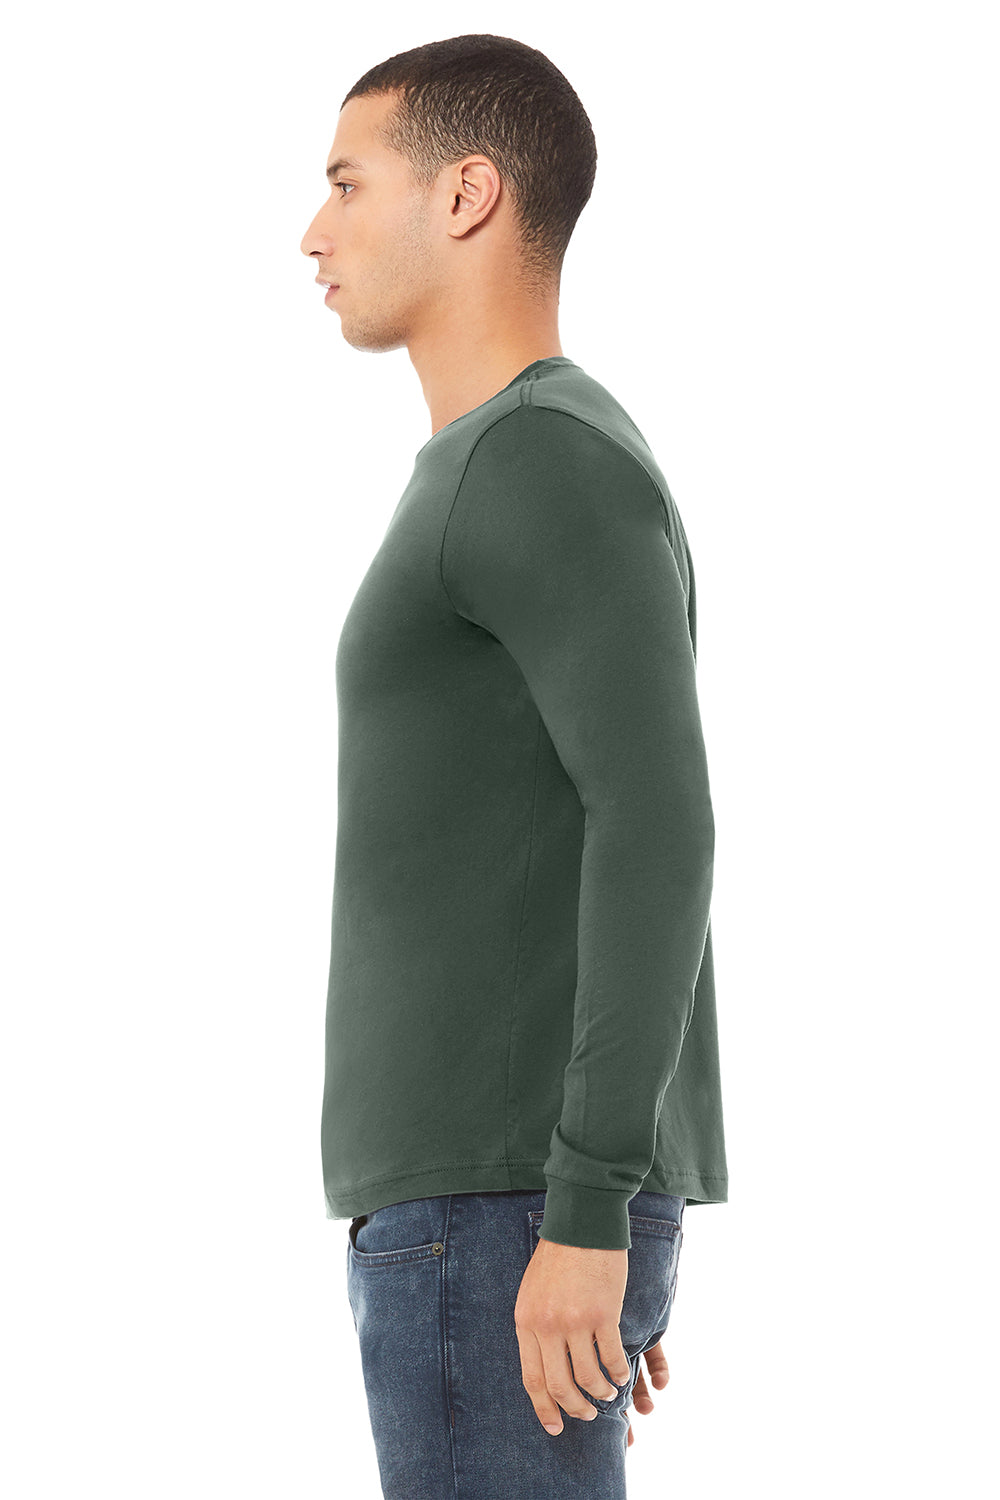 Bella + Canvas BC3501/3501 Mens Jersey Long Sleeve Crewneck T-Shirt Military Green Model Side